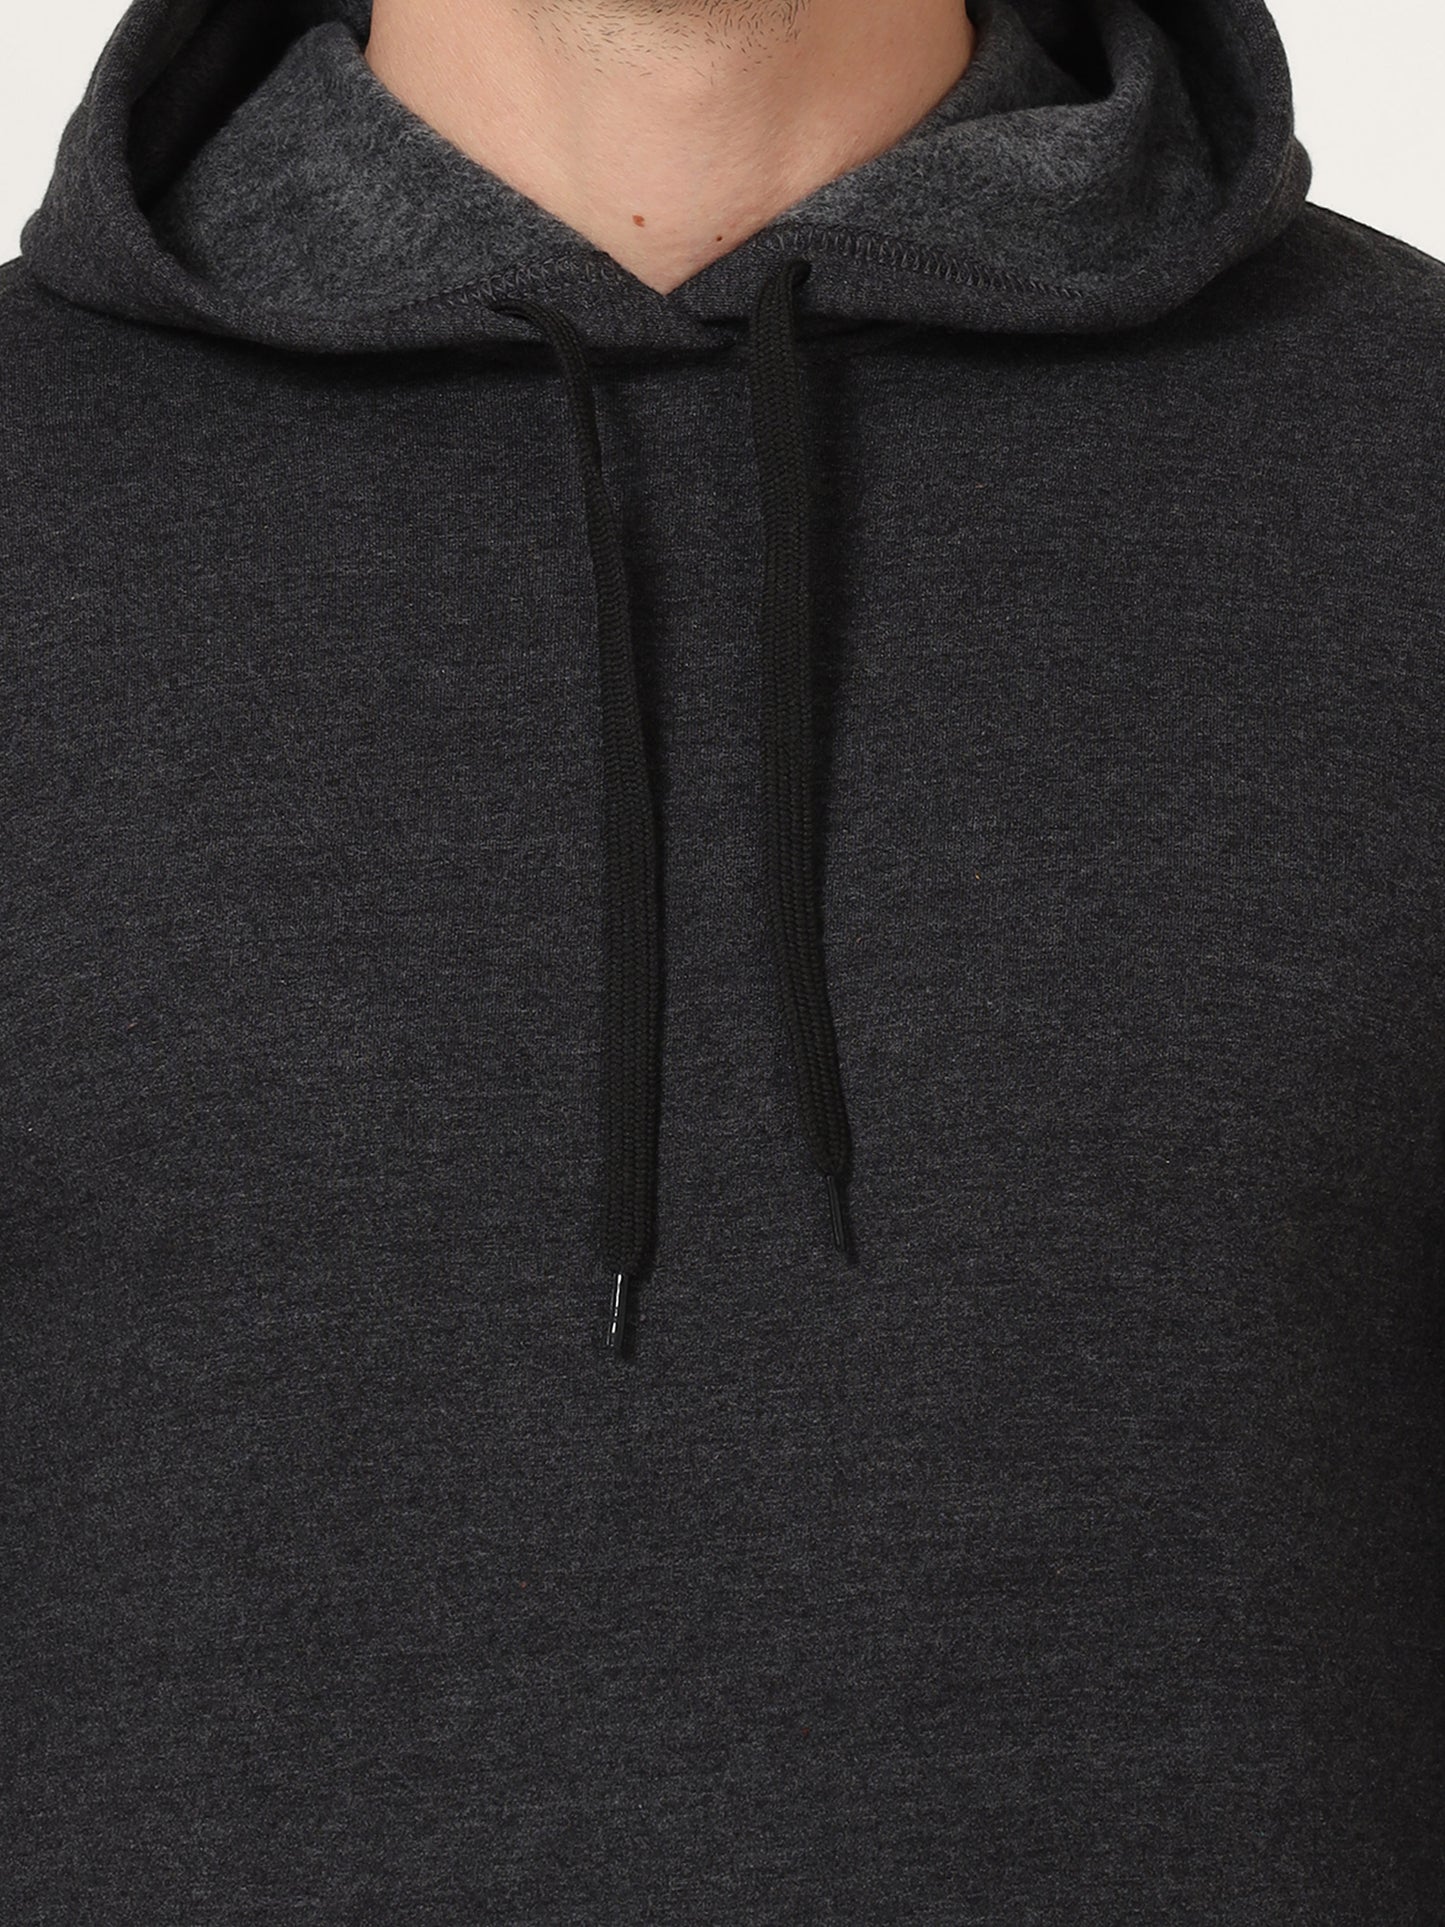 Men's Cotton Hooded Neck Plain Charcoal Melange Color Sweatshirt/Hoodies